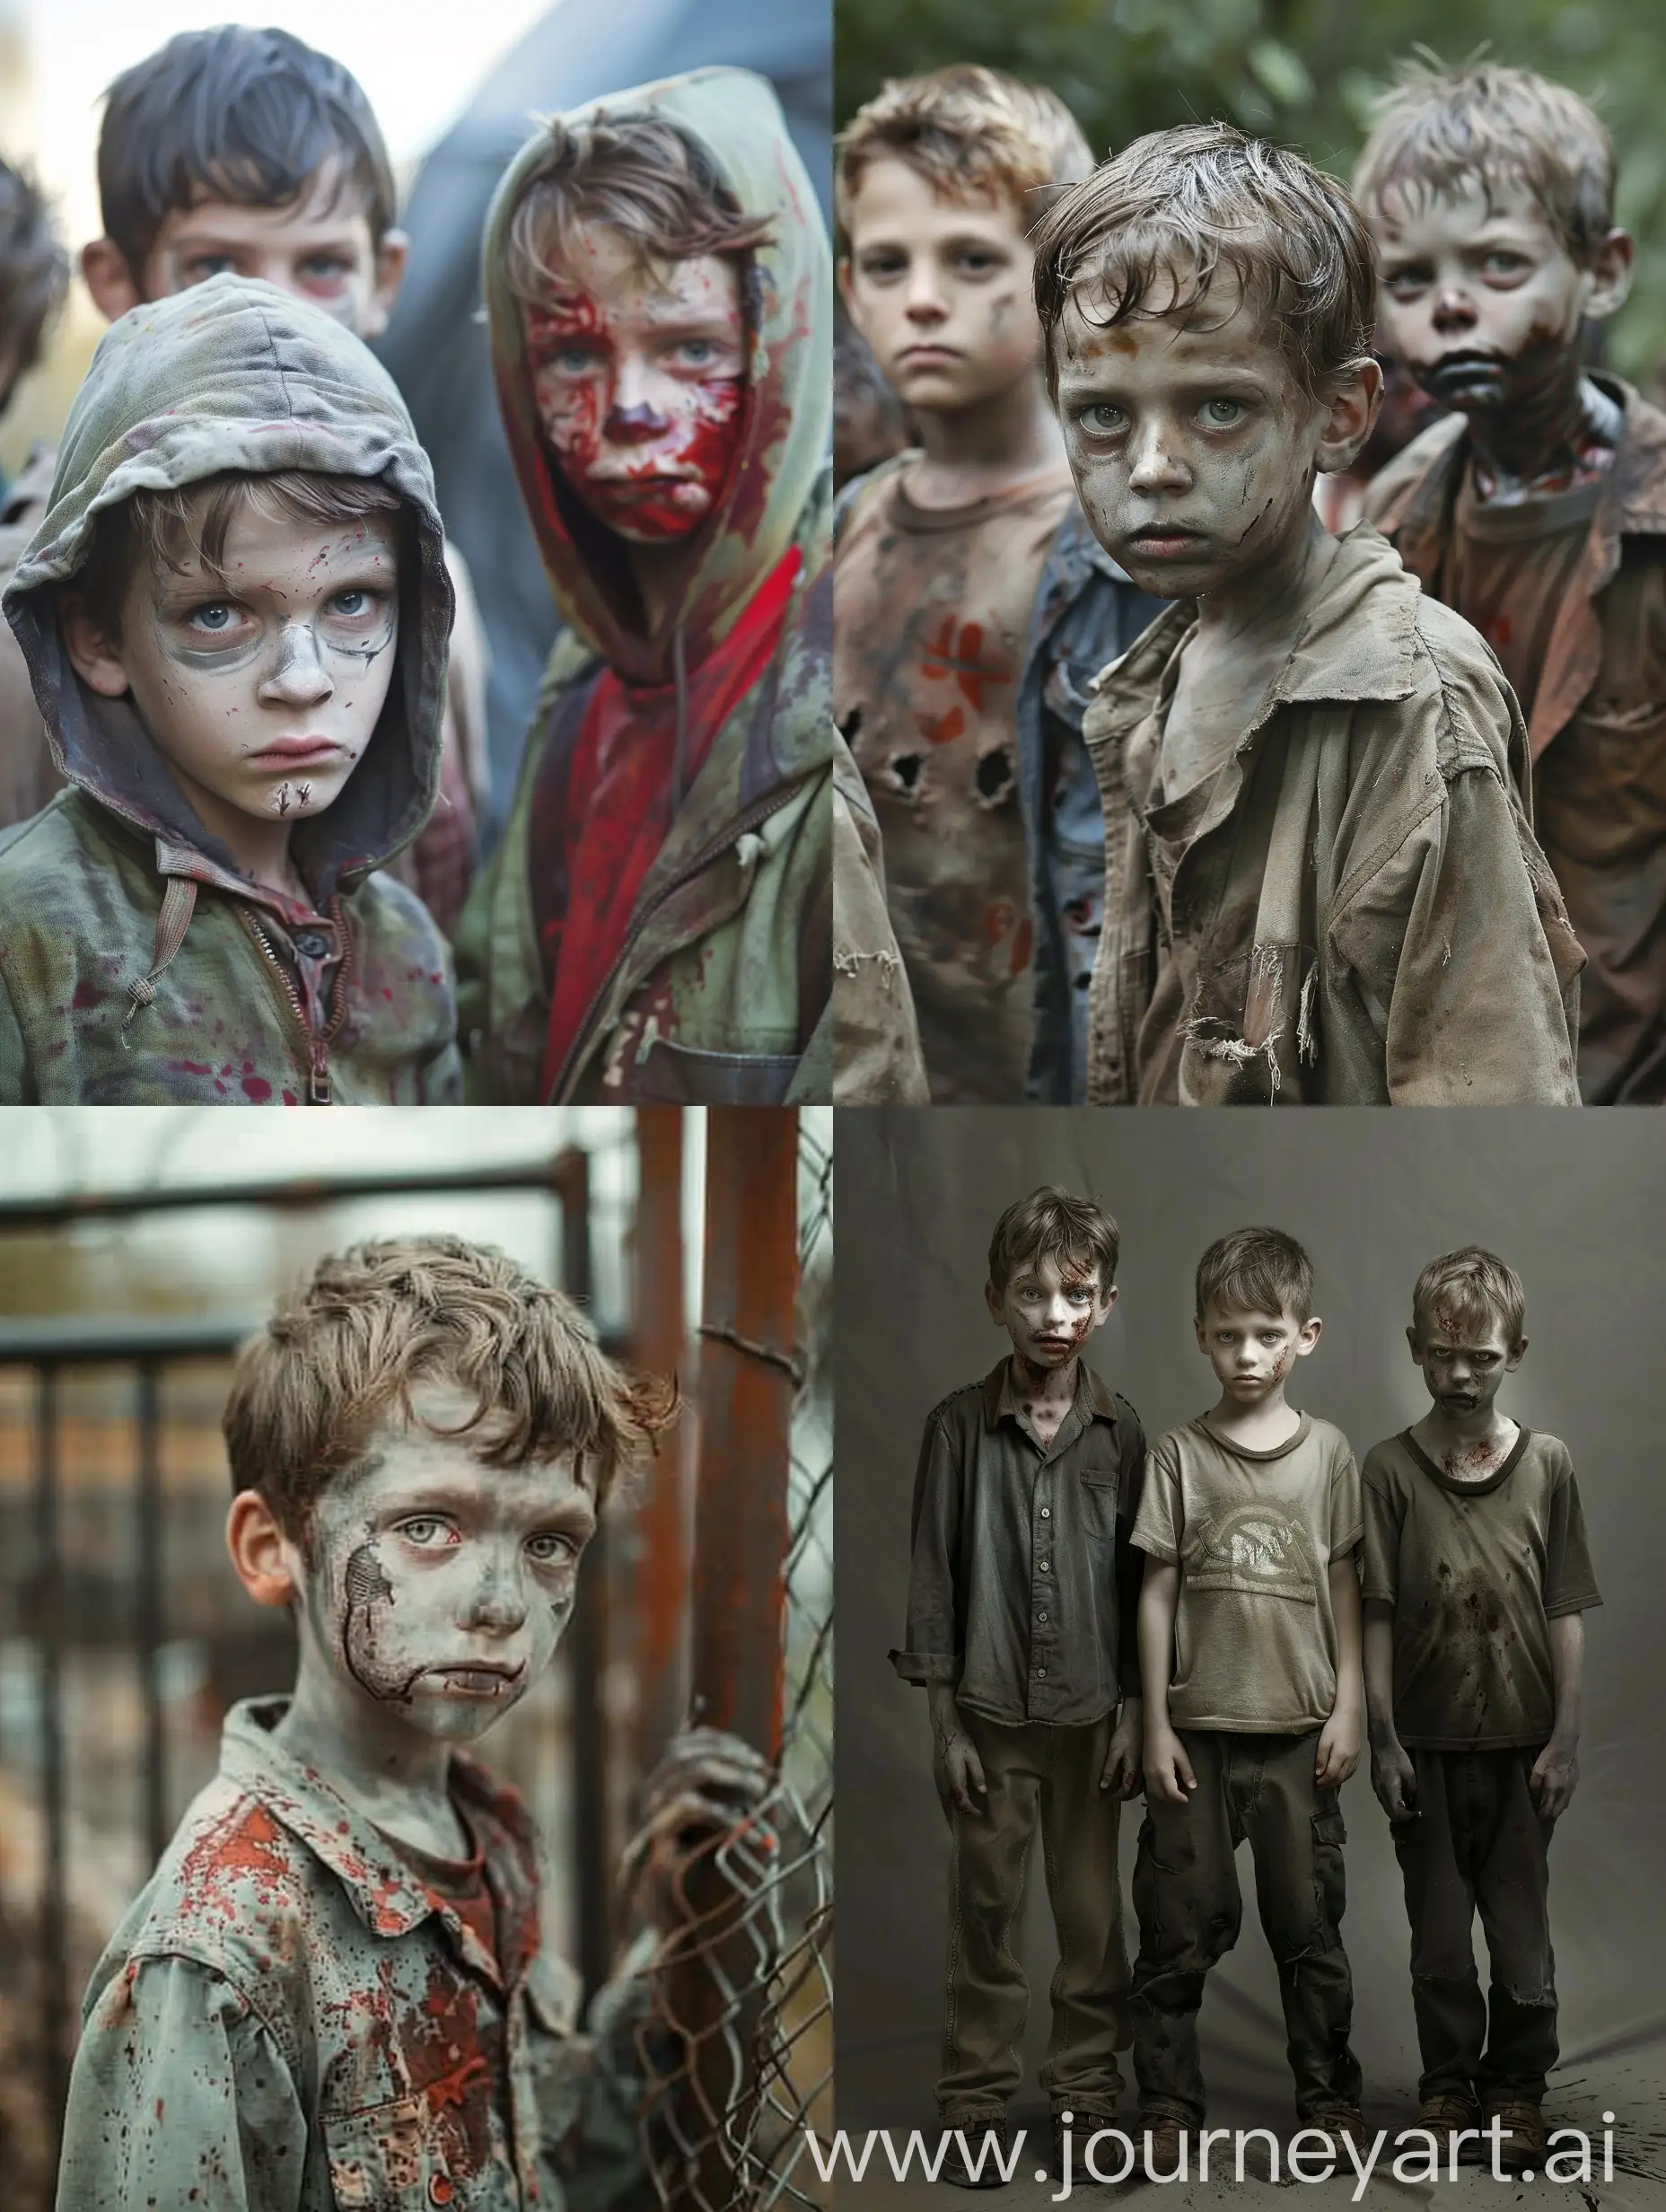 Adventurous-Little-Boys-Confronting-Playful-Zombies